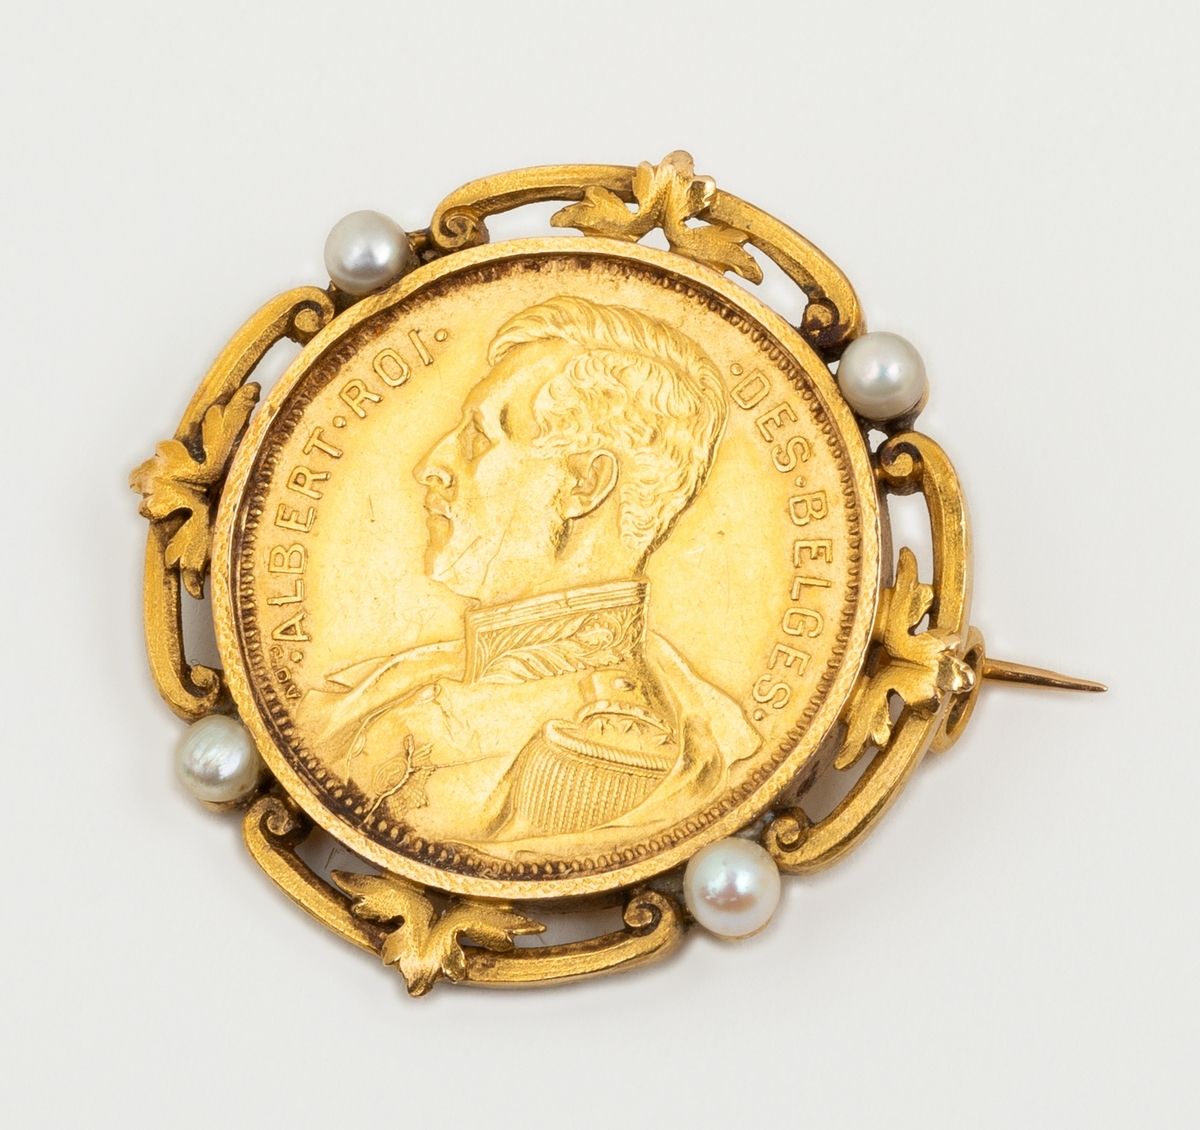 Null 18K黄金（千分之七十五）胸针，展示一枚1914年阿尔伯特一世的20比利时法郎金币，周围是由四颗小珍珠点缀的镂空设计（未测试）。
直径：2.9厘米。
&hellip;